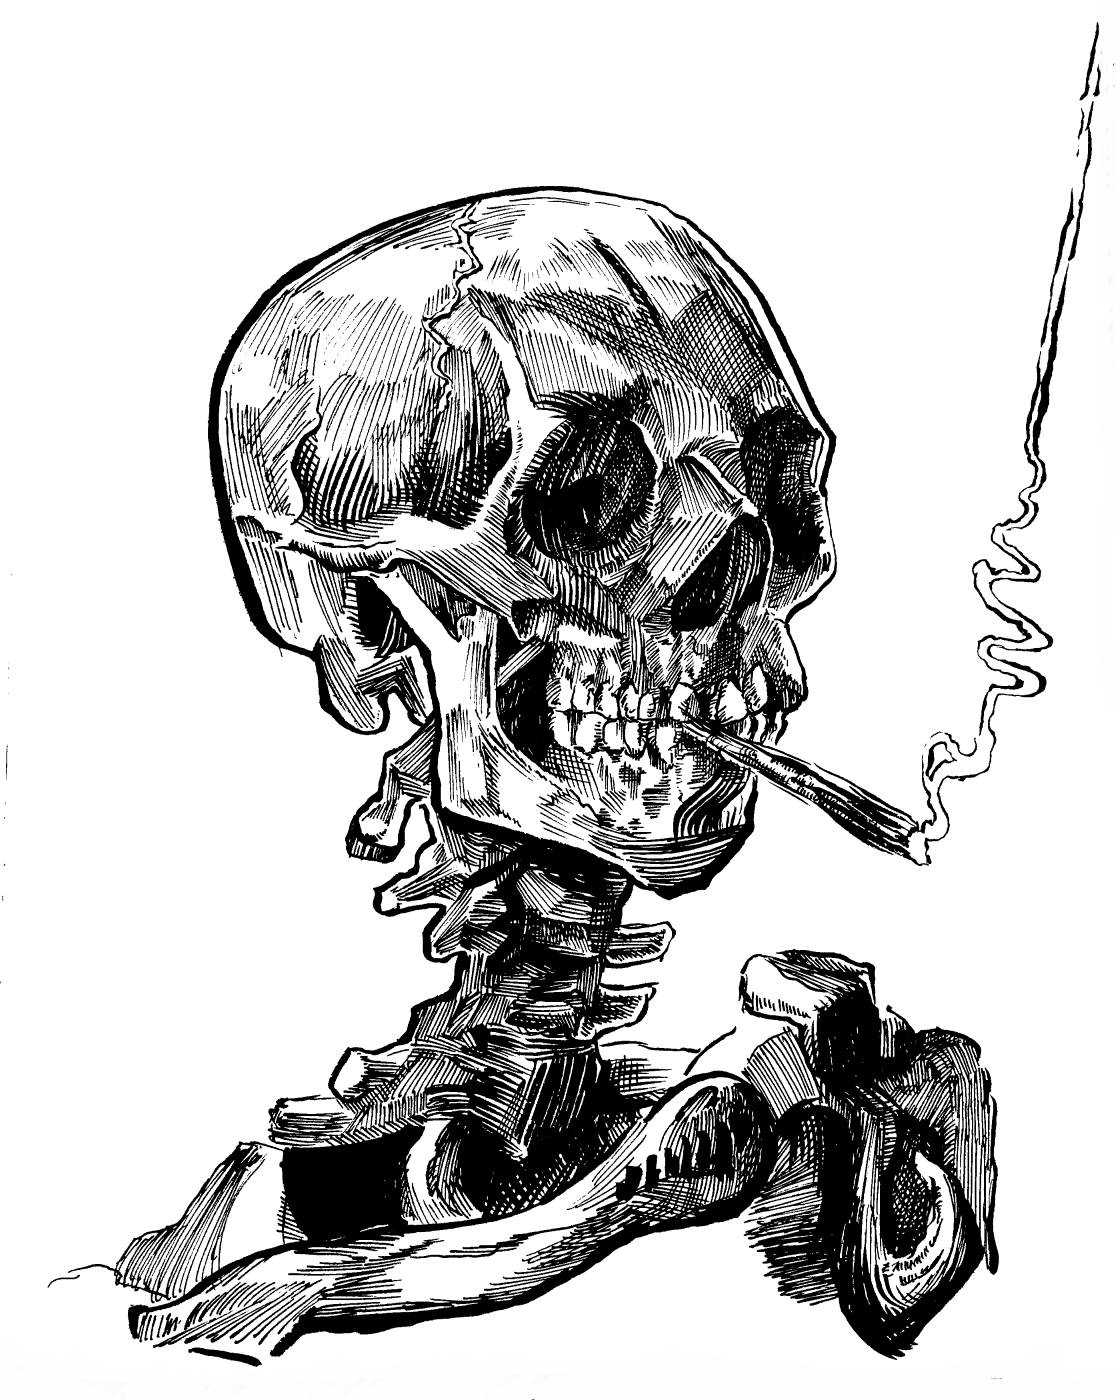 Study of Van Gogh's Skull with Burning Cigarette